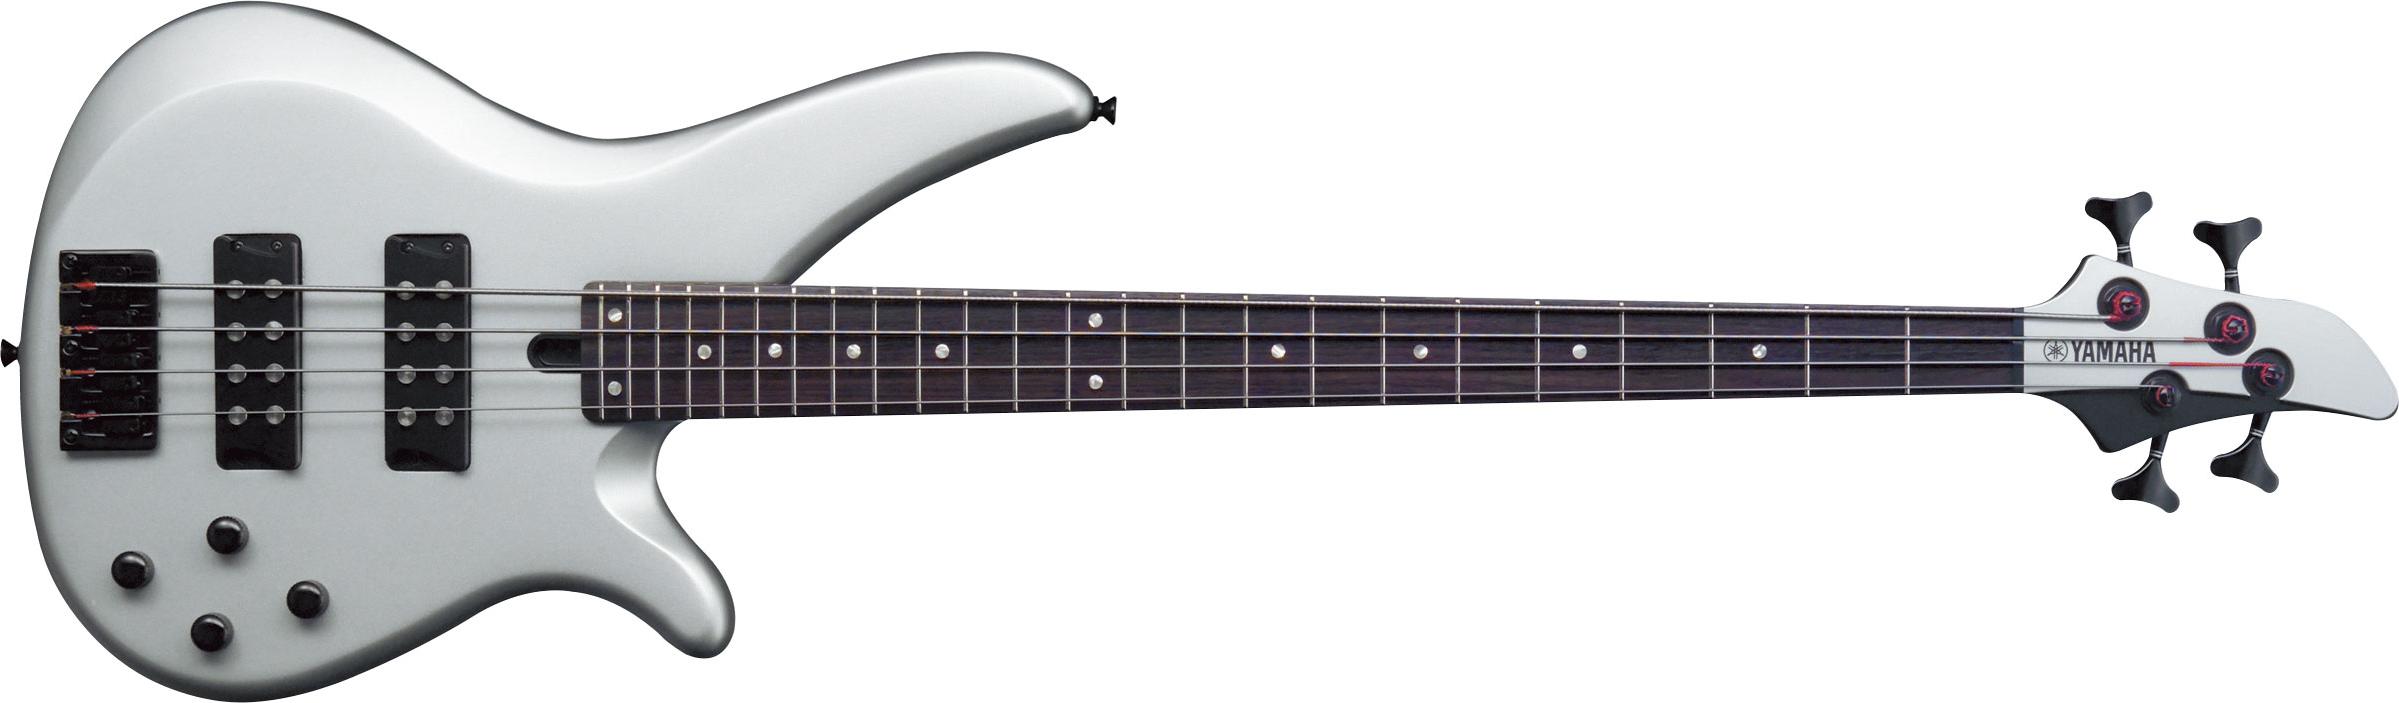 Бас-гитара Yamaha RBX374 FS